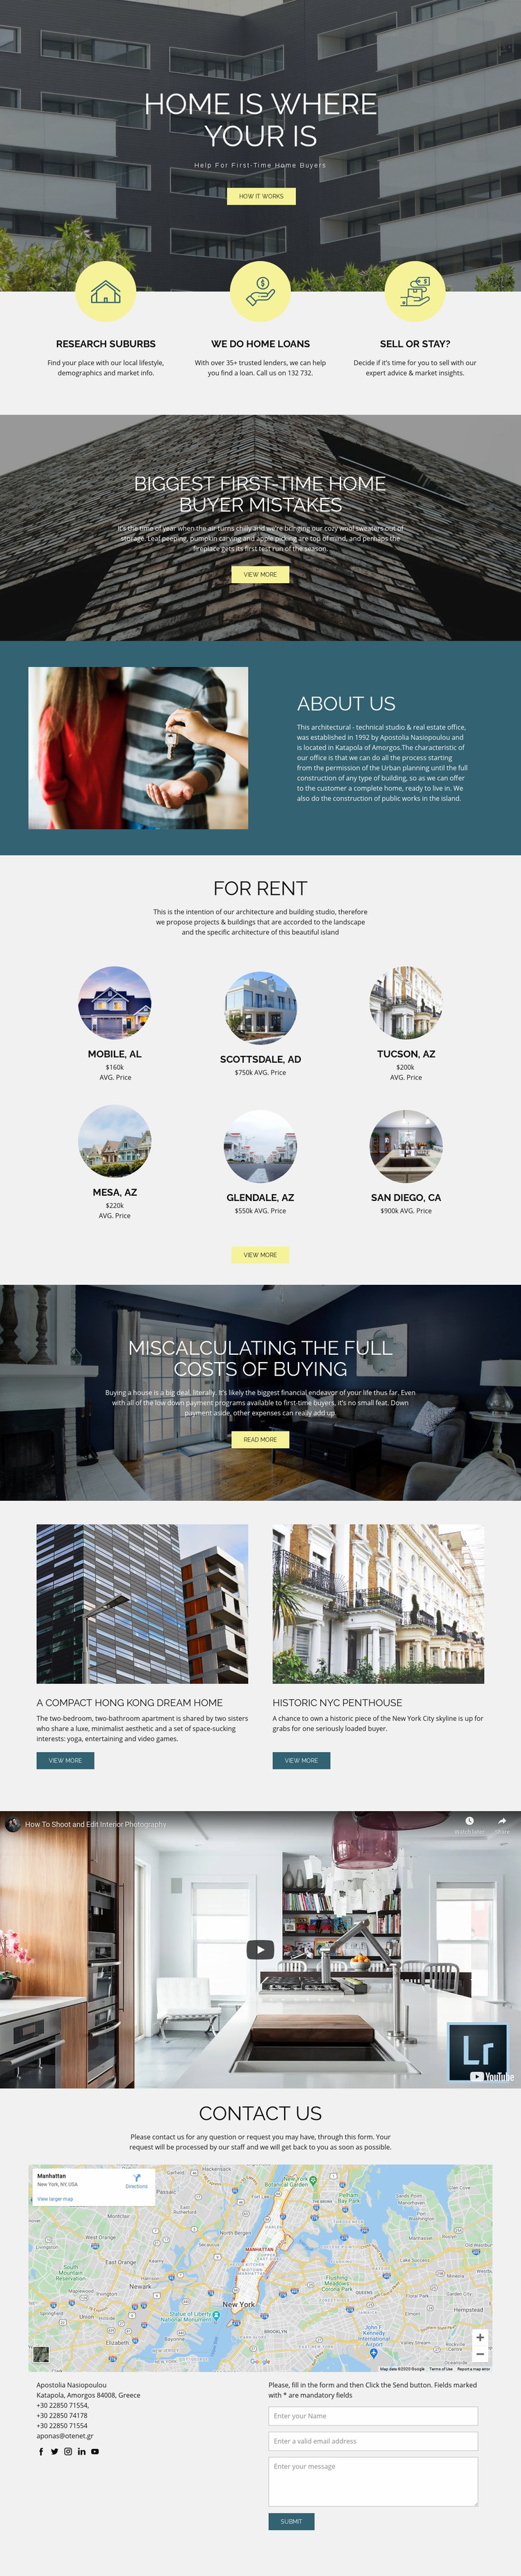 Home real estate Web Page Design